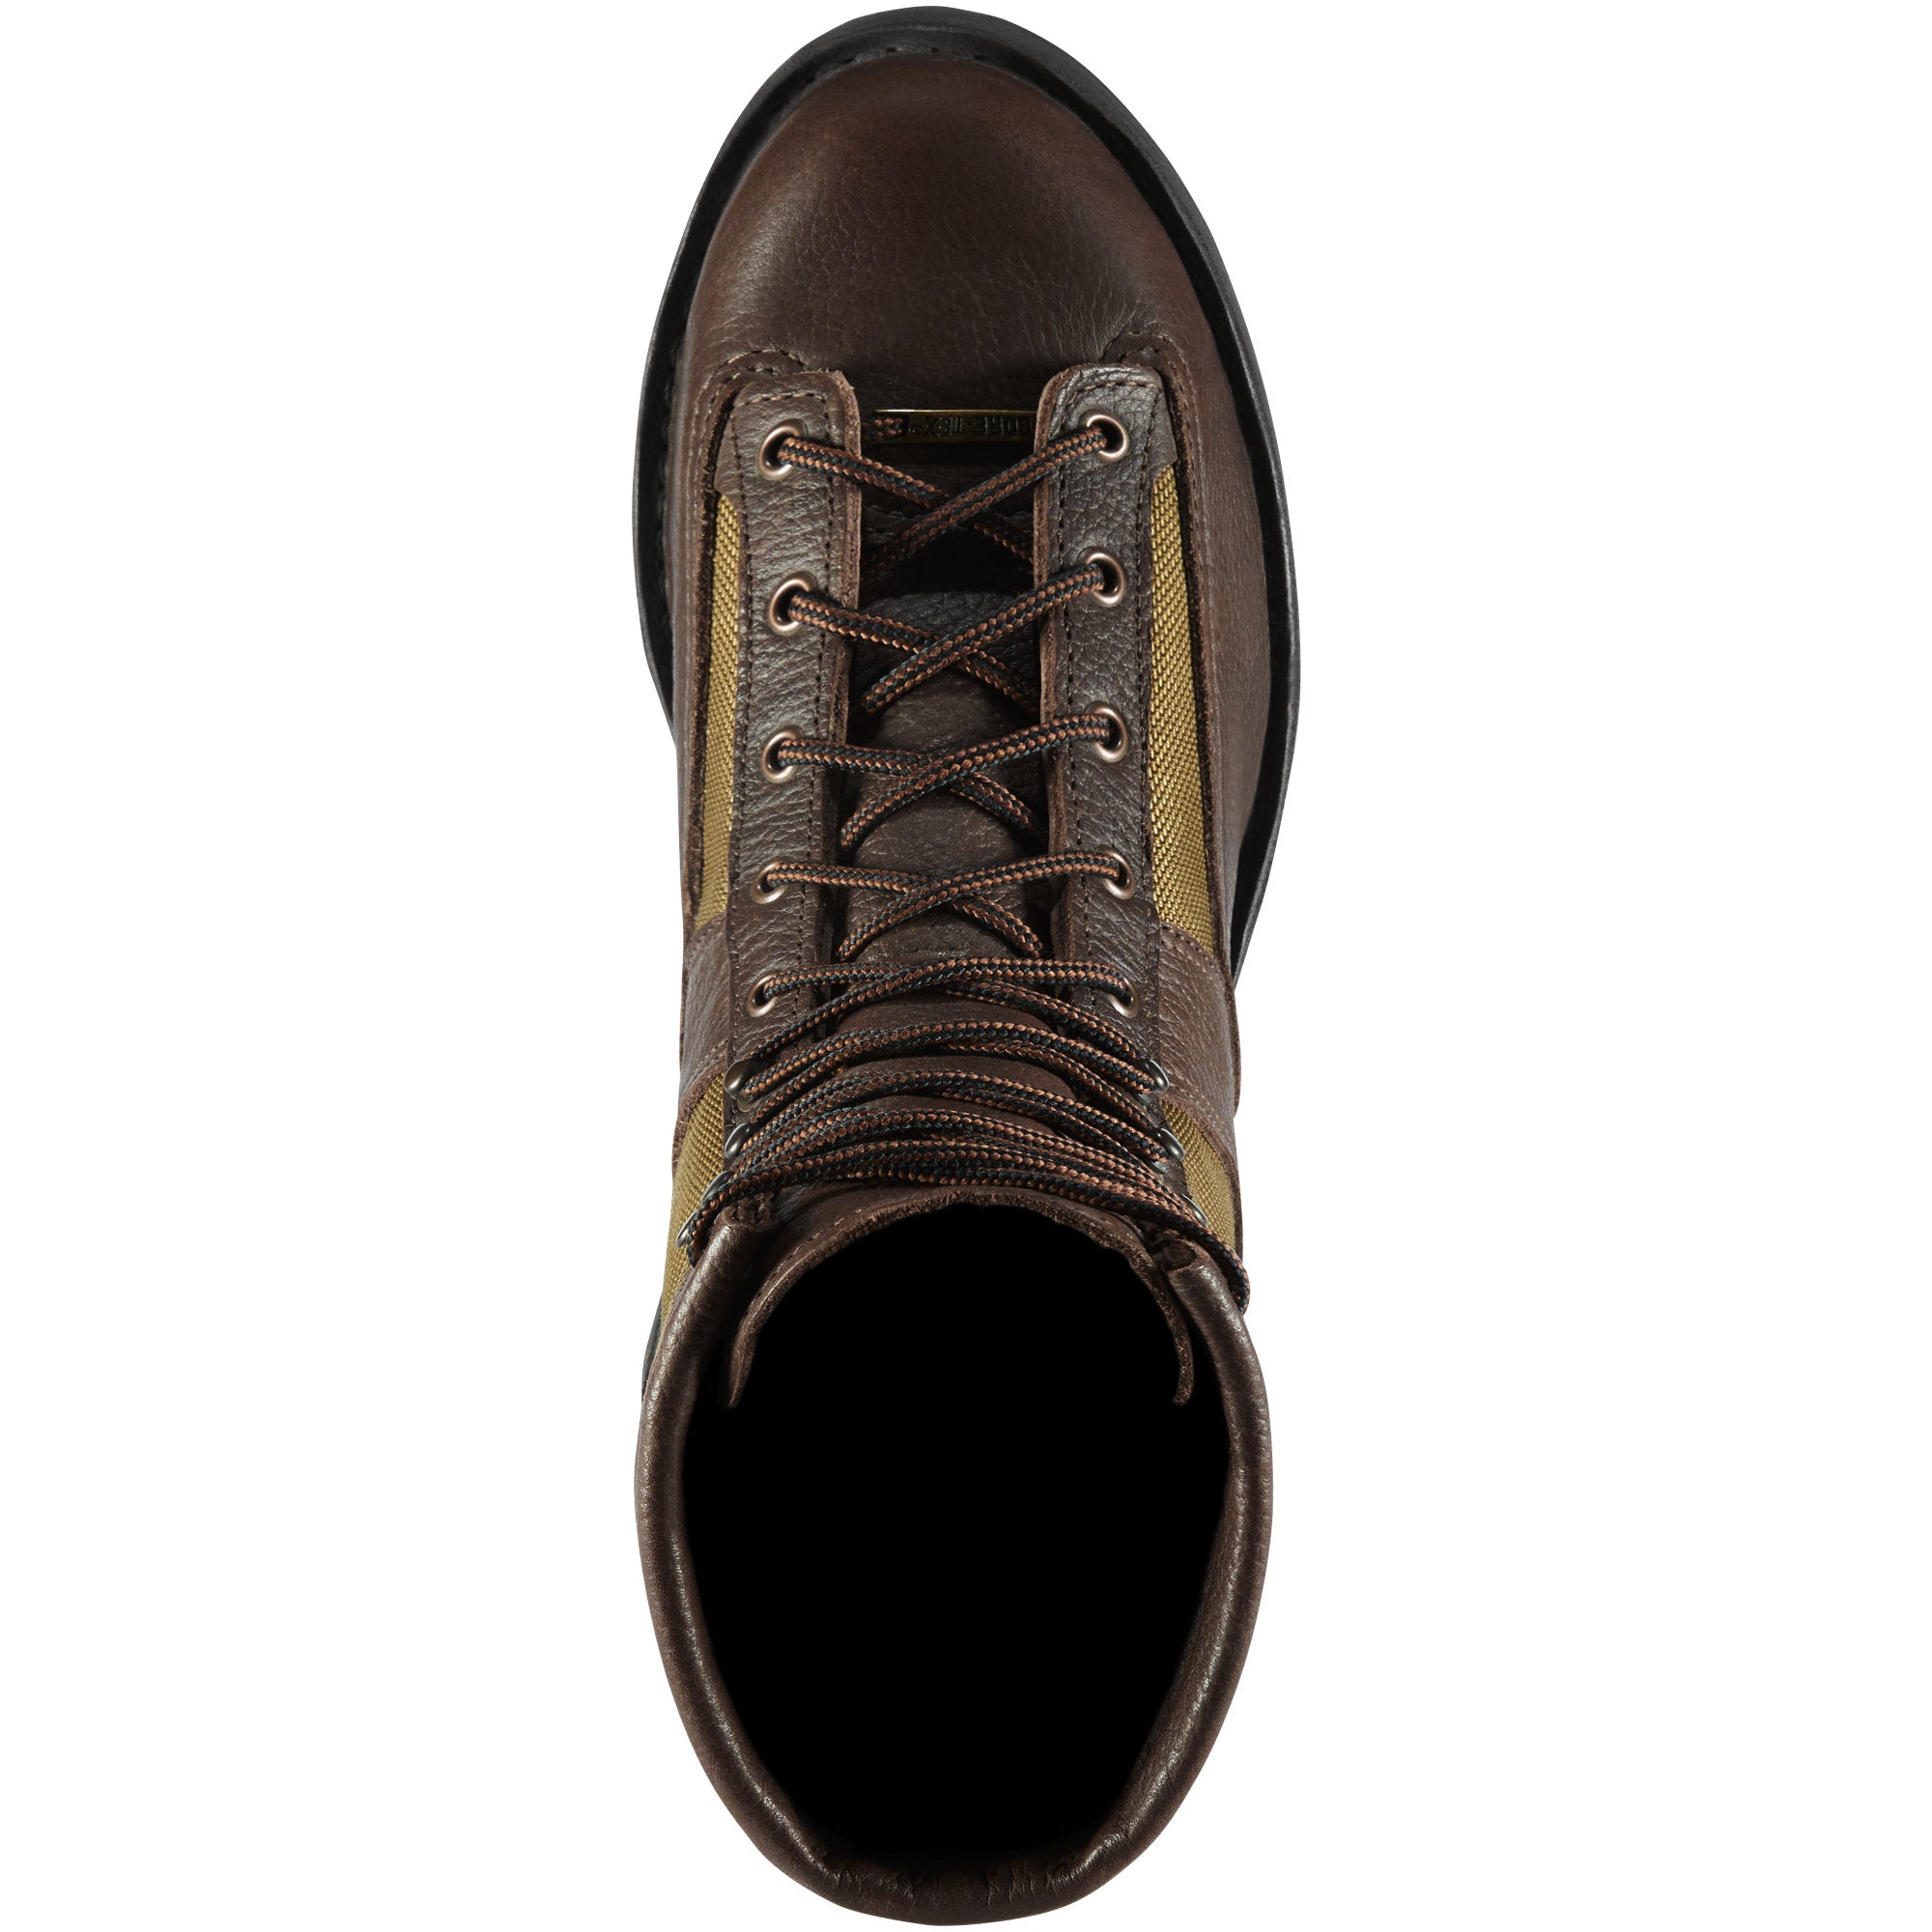 DANNER Grouse - Men's 8" Brown Boot